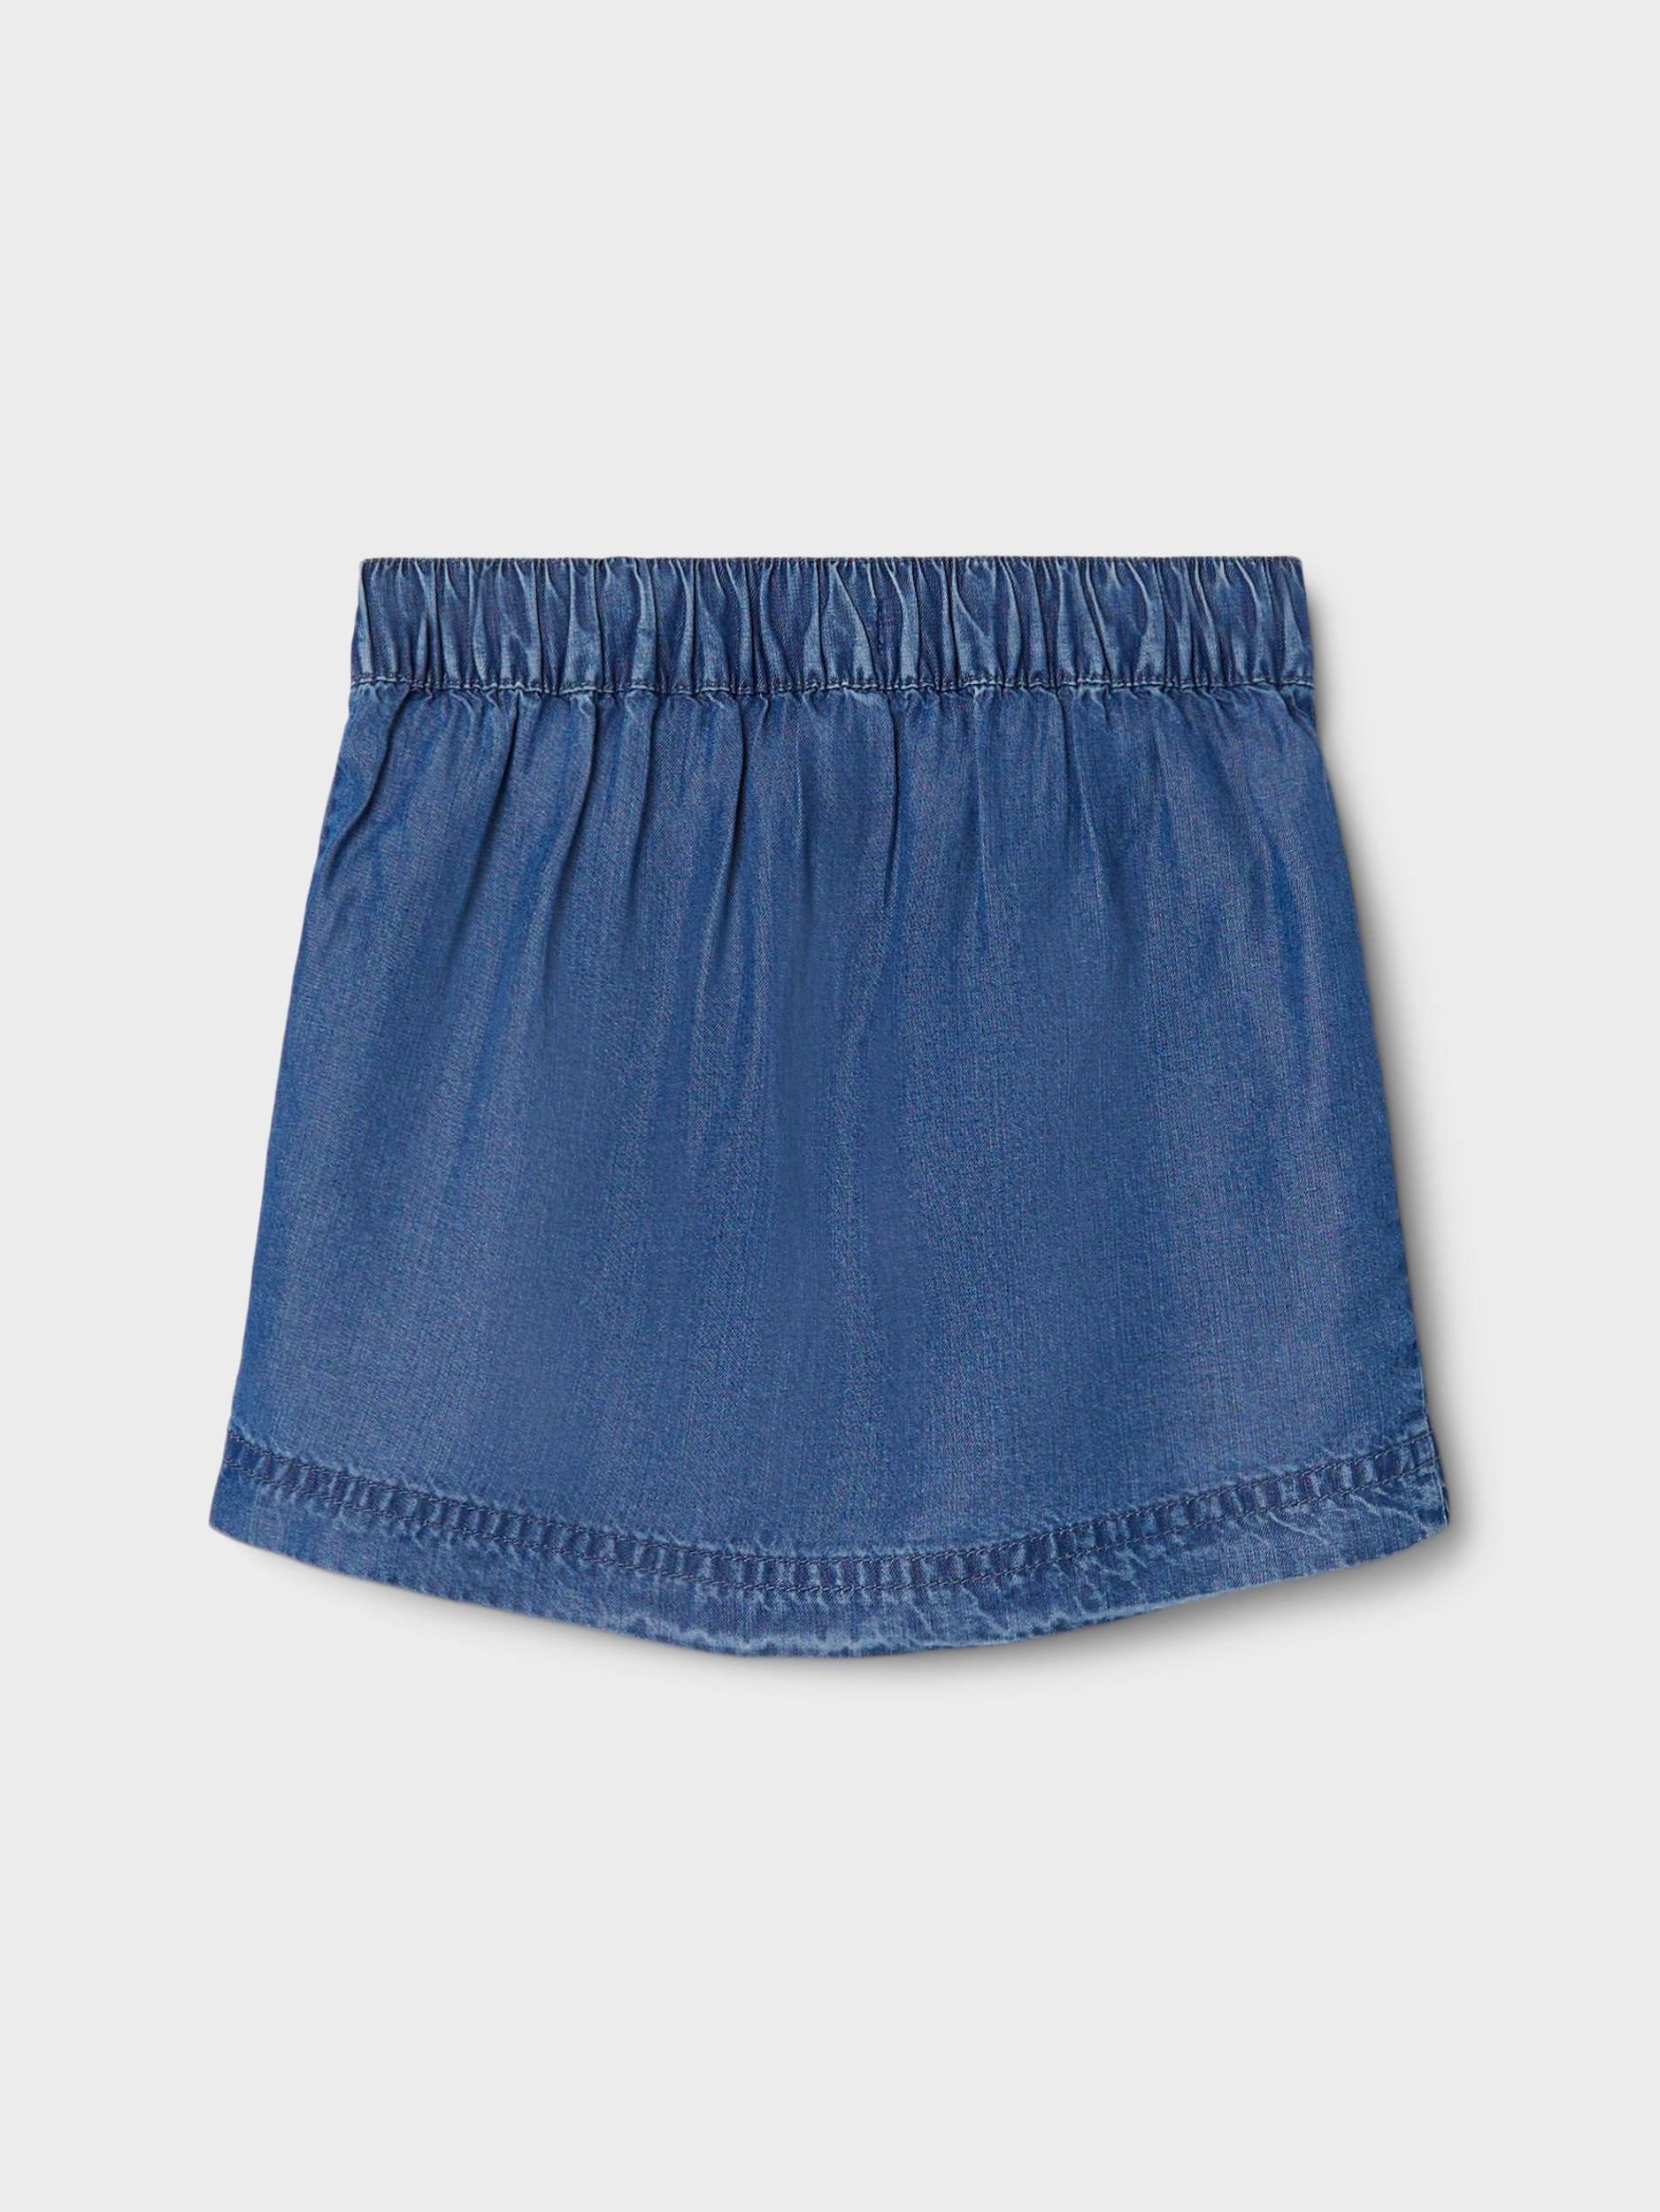 Baseesee Skirt-Medium Blue Denim-Back view